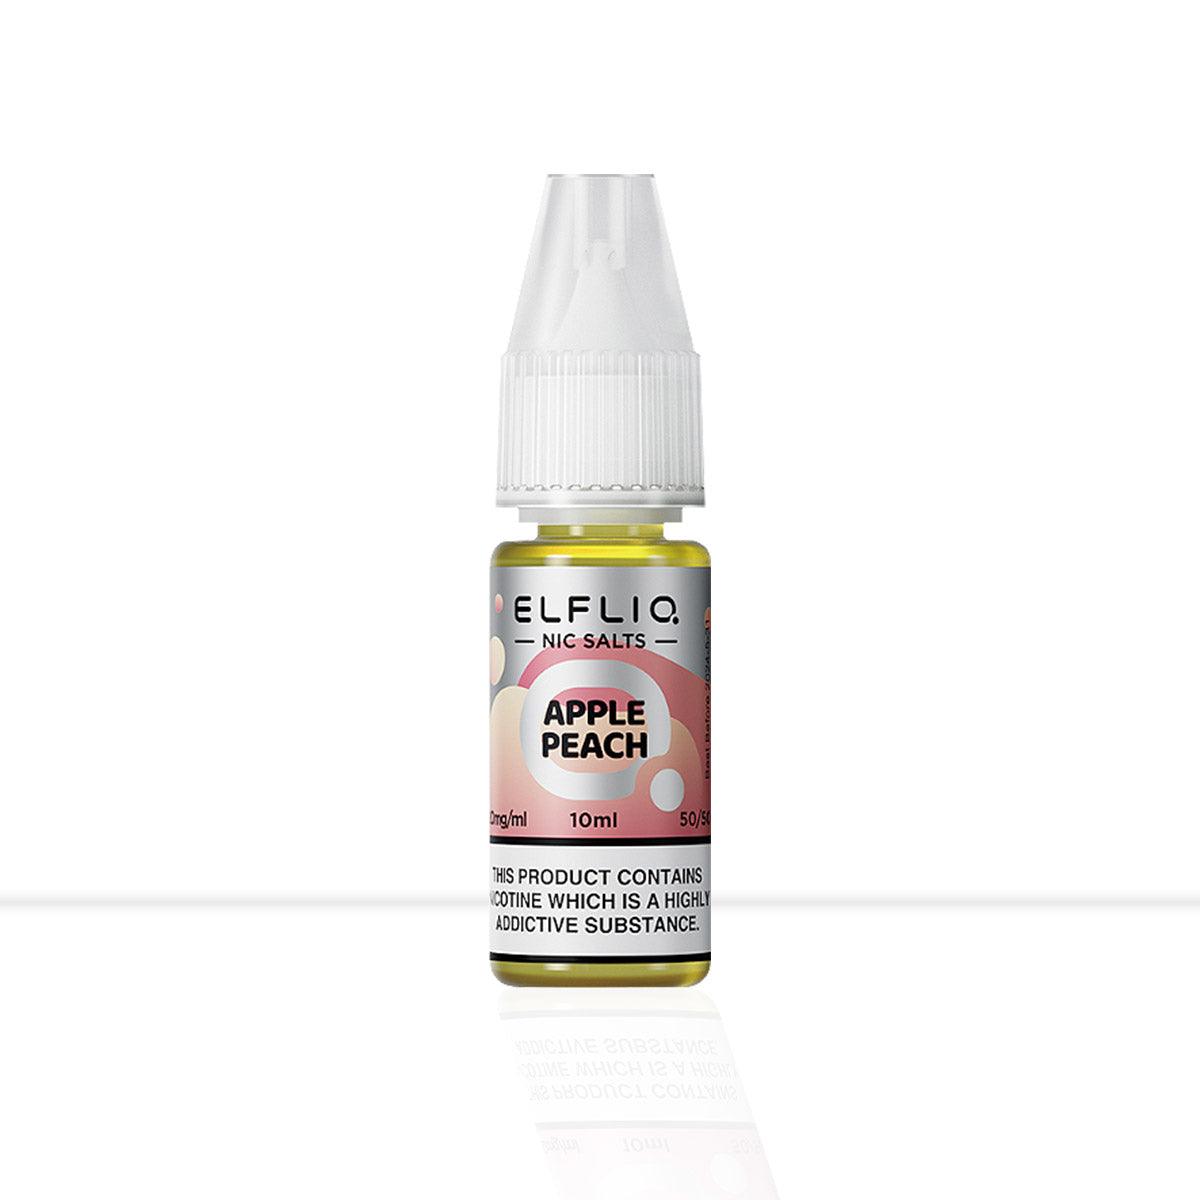 Apple Peach Nic Salt E-liquid Elf Bar Elfliq - Apple Peach Nic Salt E-liquid Elf Bar Elfliq - E Liquid